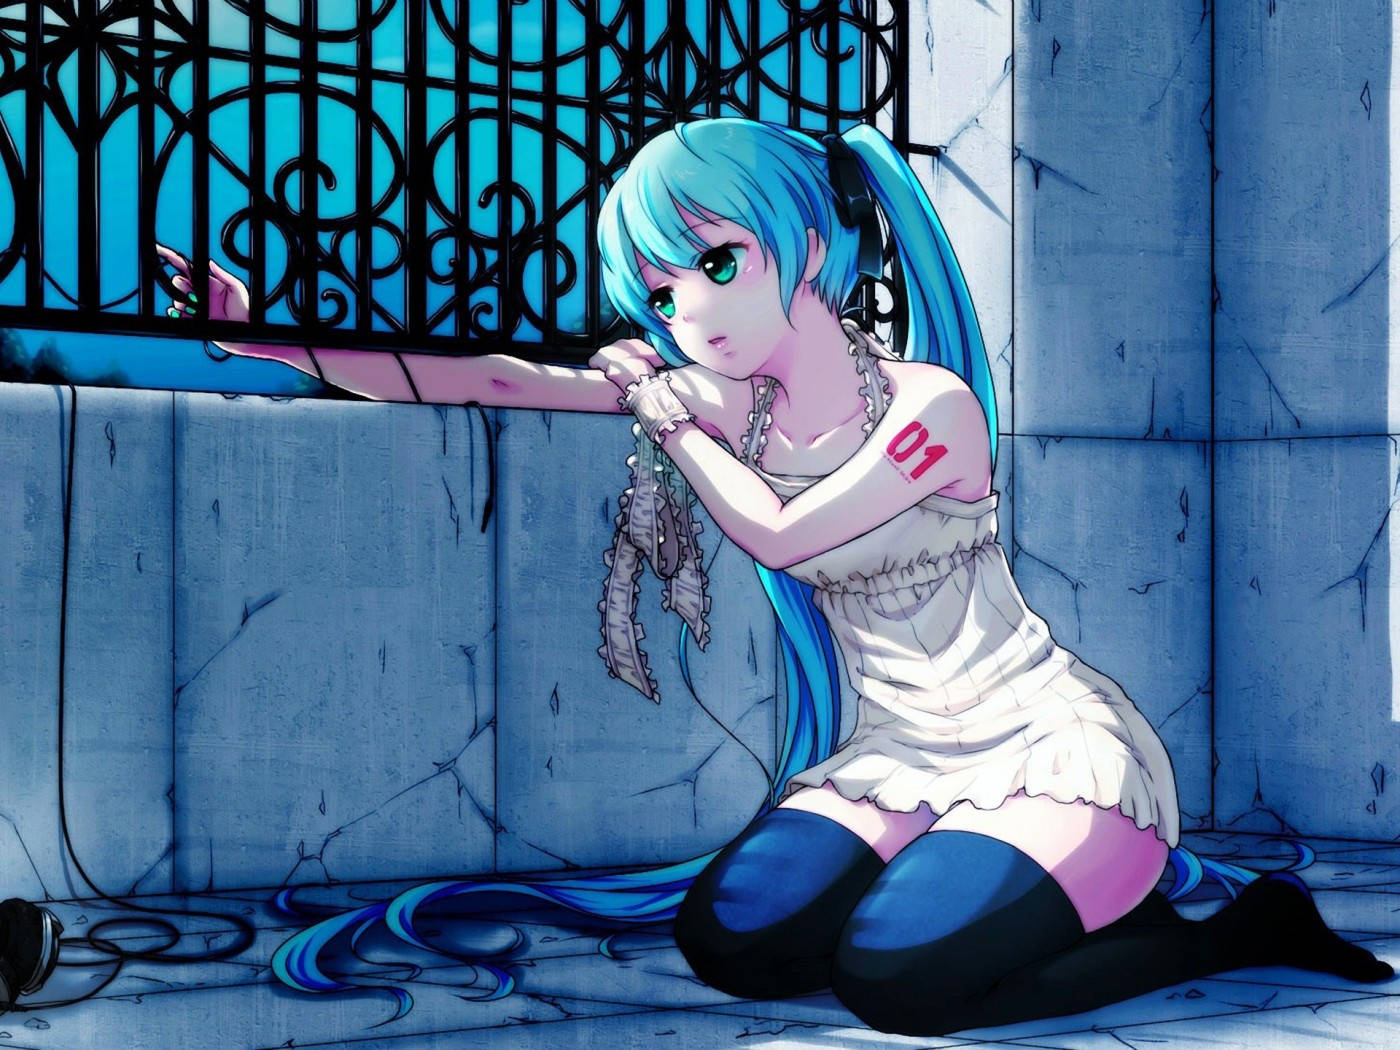 Aesthetic Sad Anime Girl In The Porch Wallpaper